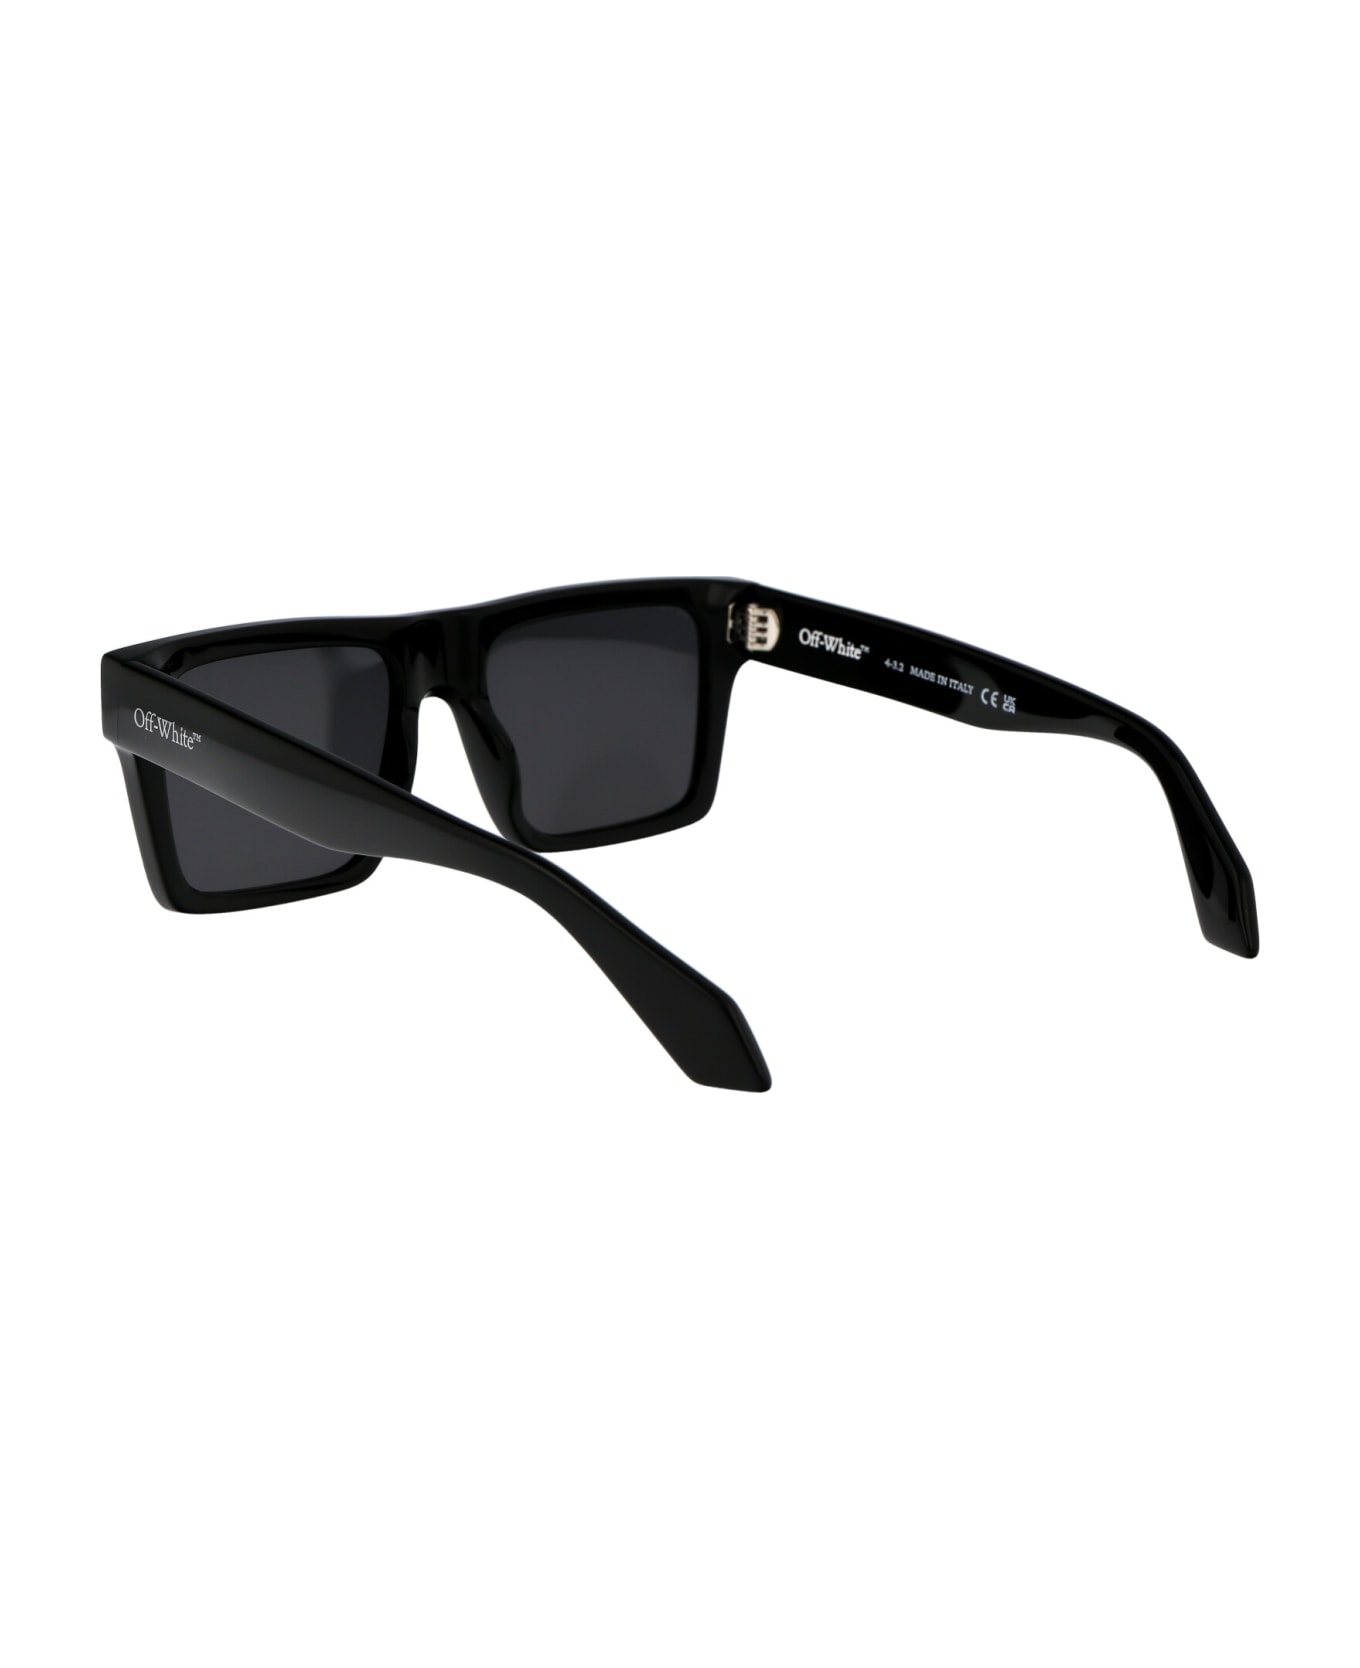 Off-White Lawton Sunglasses - 1007 BLACK